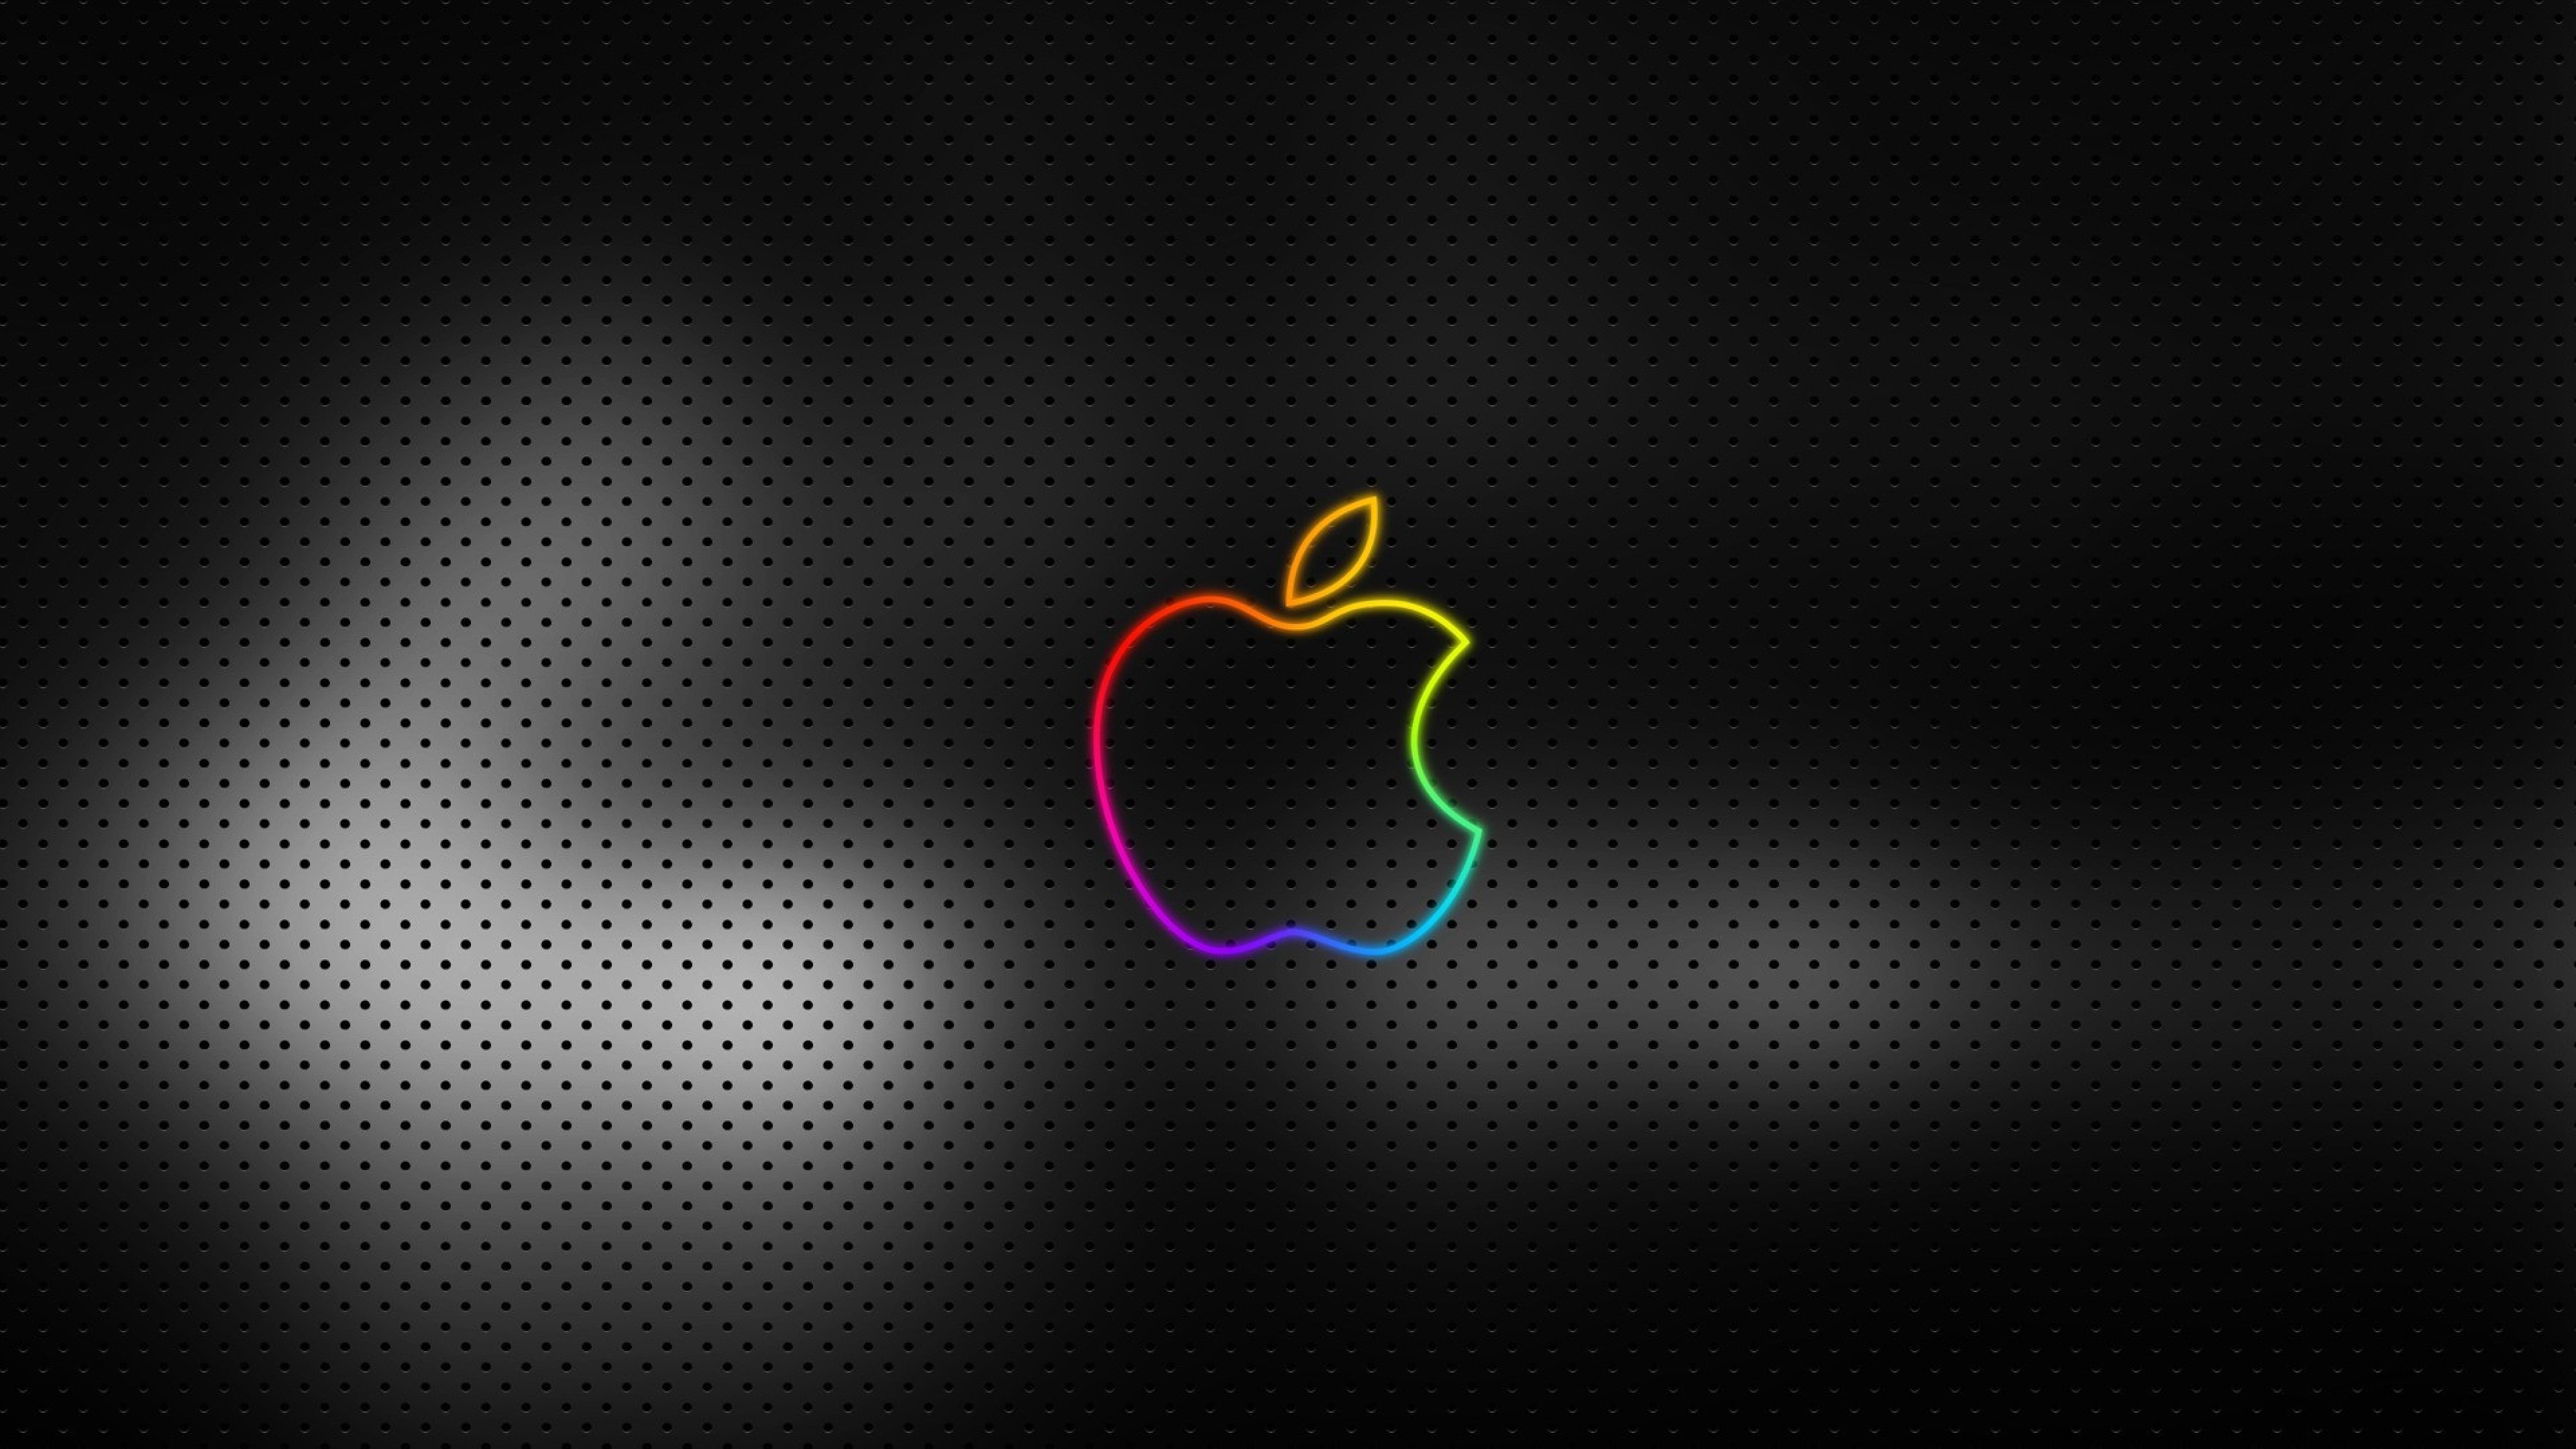 download the new for apple OkMap Desktop 17.10.8